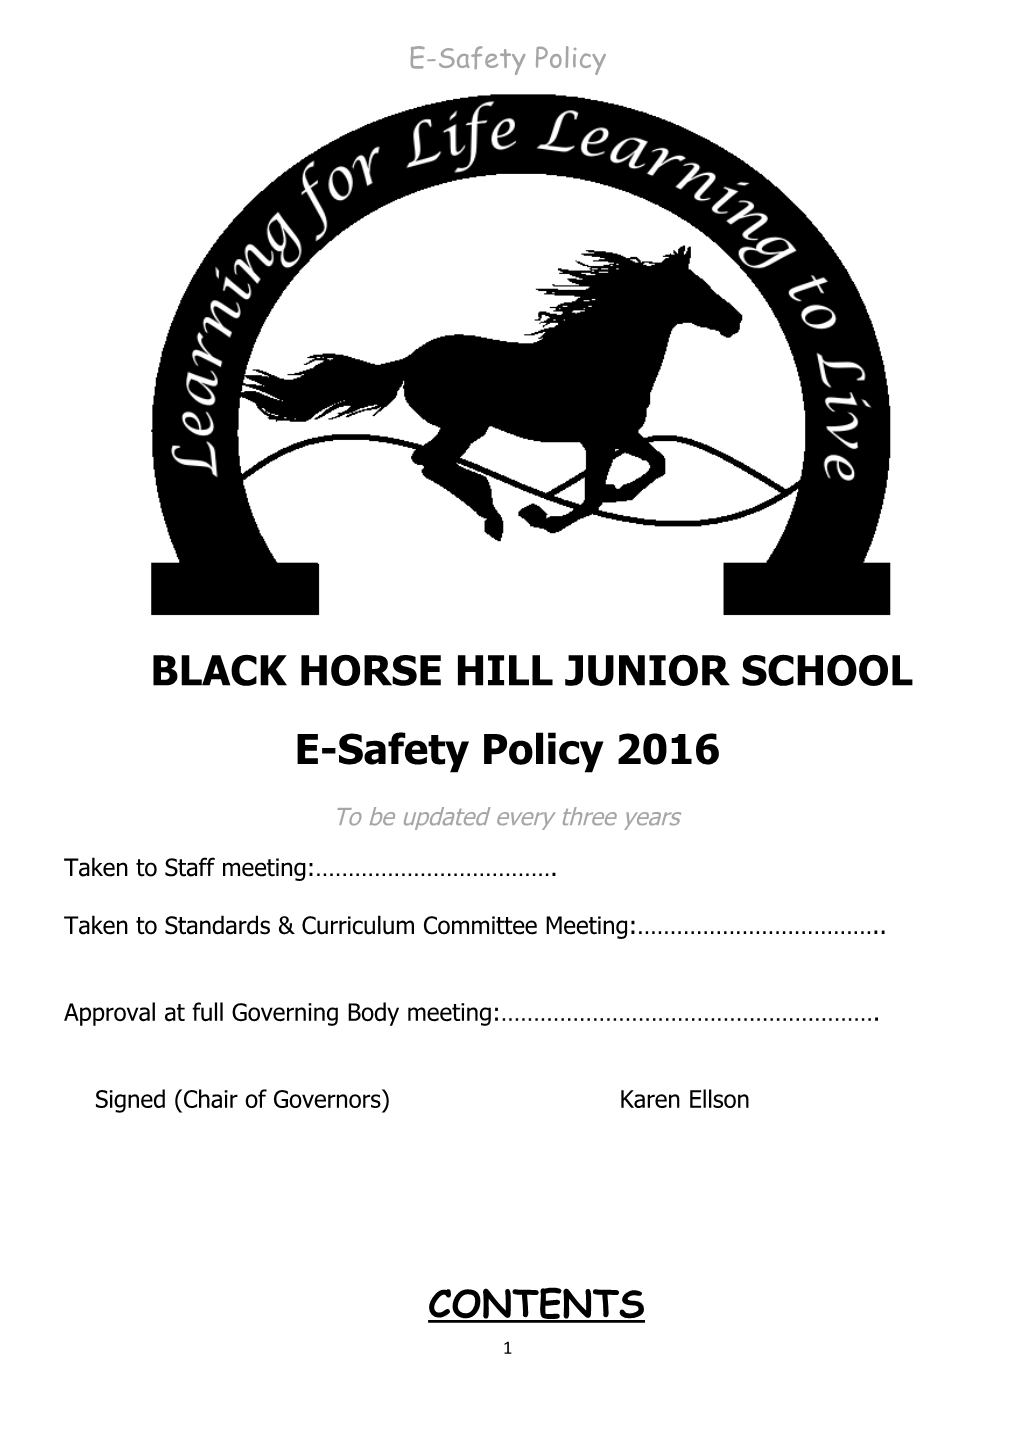 Black Horse Hill Junior School